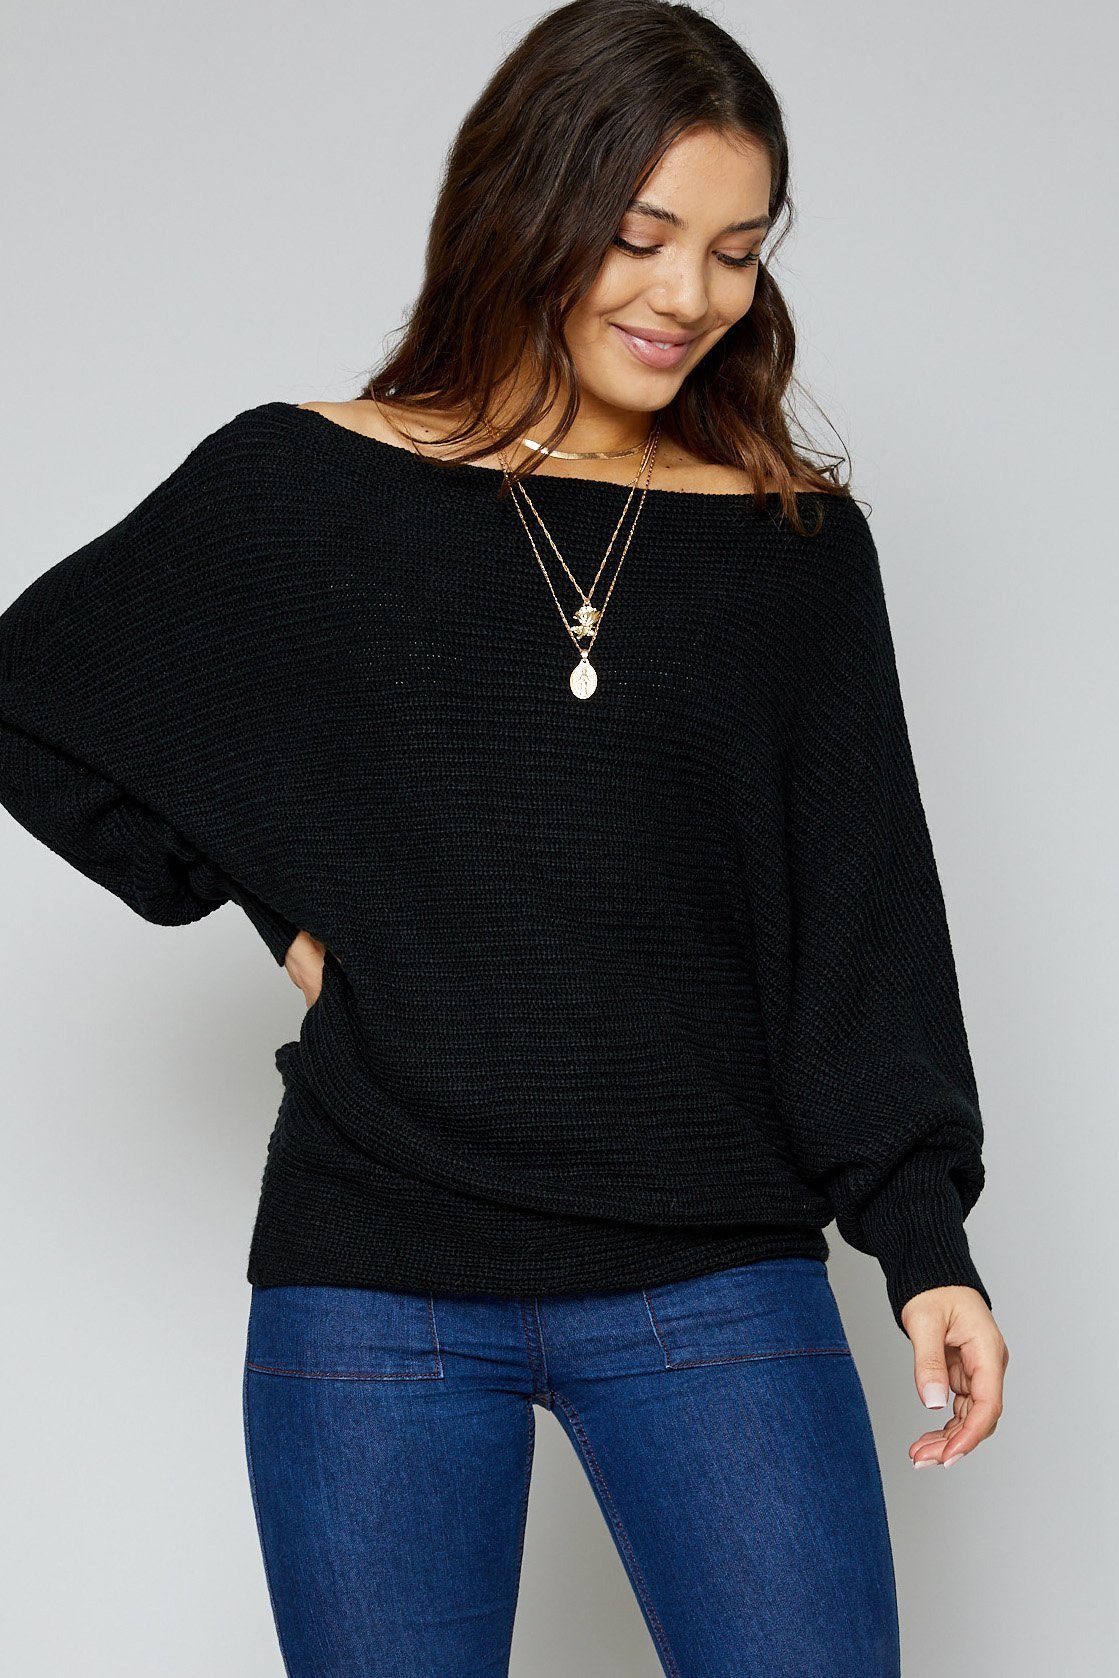 Suki Black Sweater-Dakotas Boutique